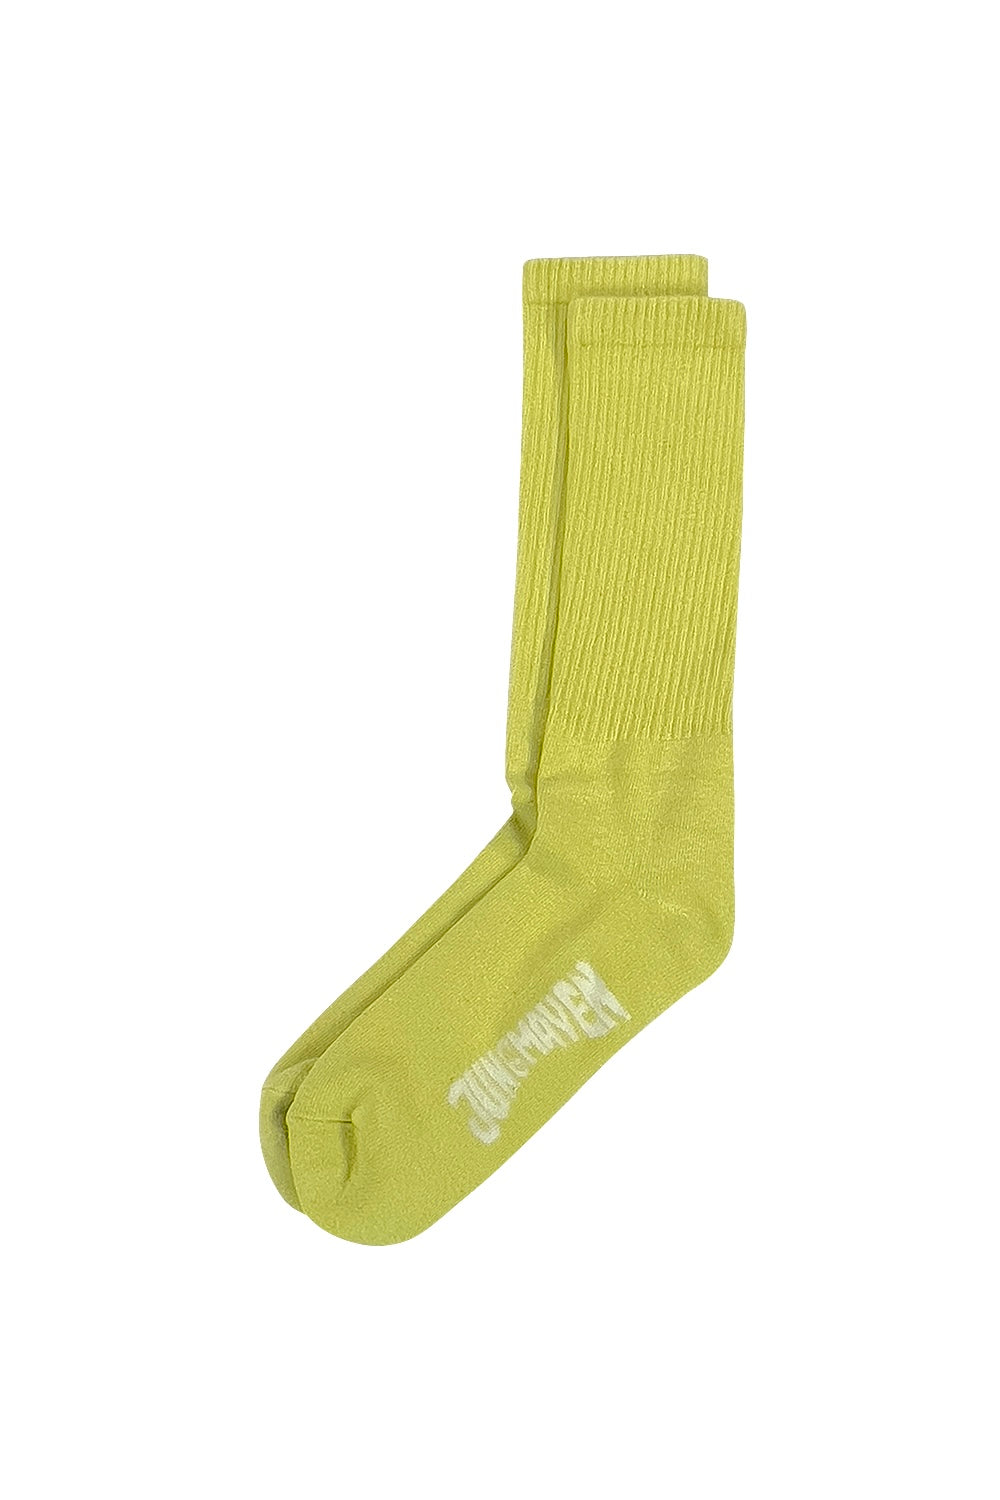 Hemp Crew Socks | Jungmaven Hemp Clothing & Accessories / Color: Limelight